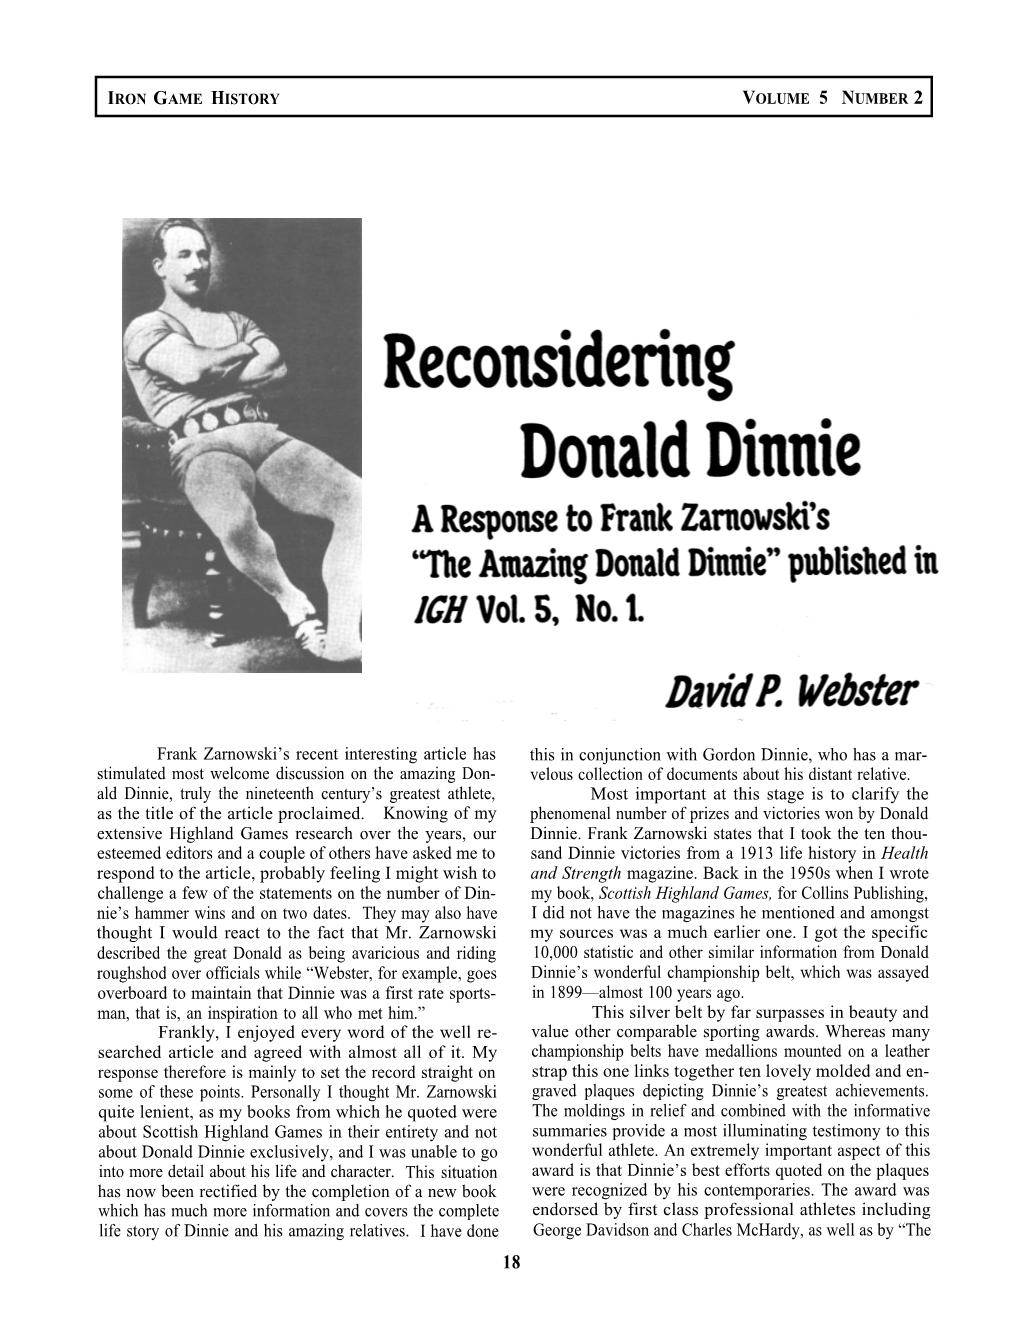 Reconsidering Donald Dinnie